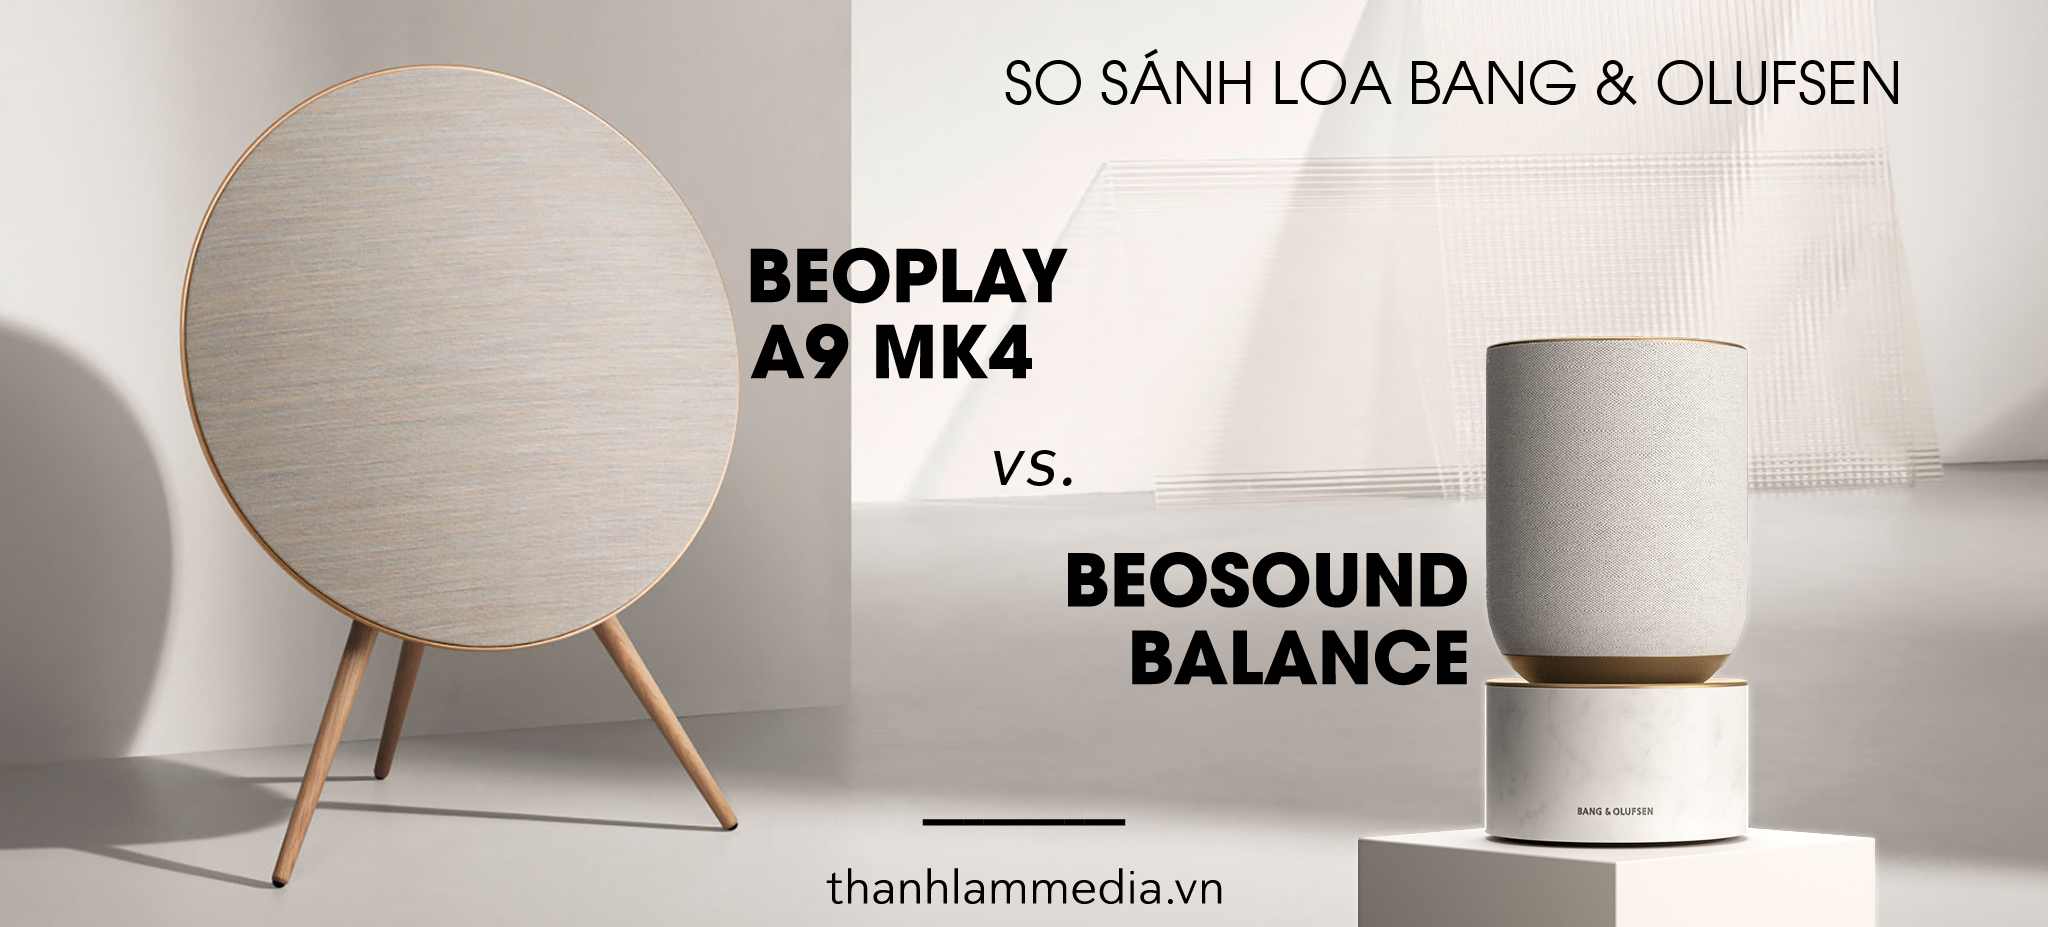 So sánh hai mẫu loa Bang & Olufsen: Beoplay A9 MK4 vs Beosound Balance 26